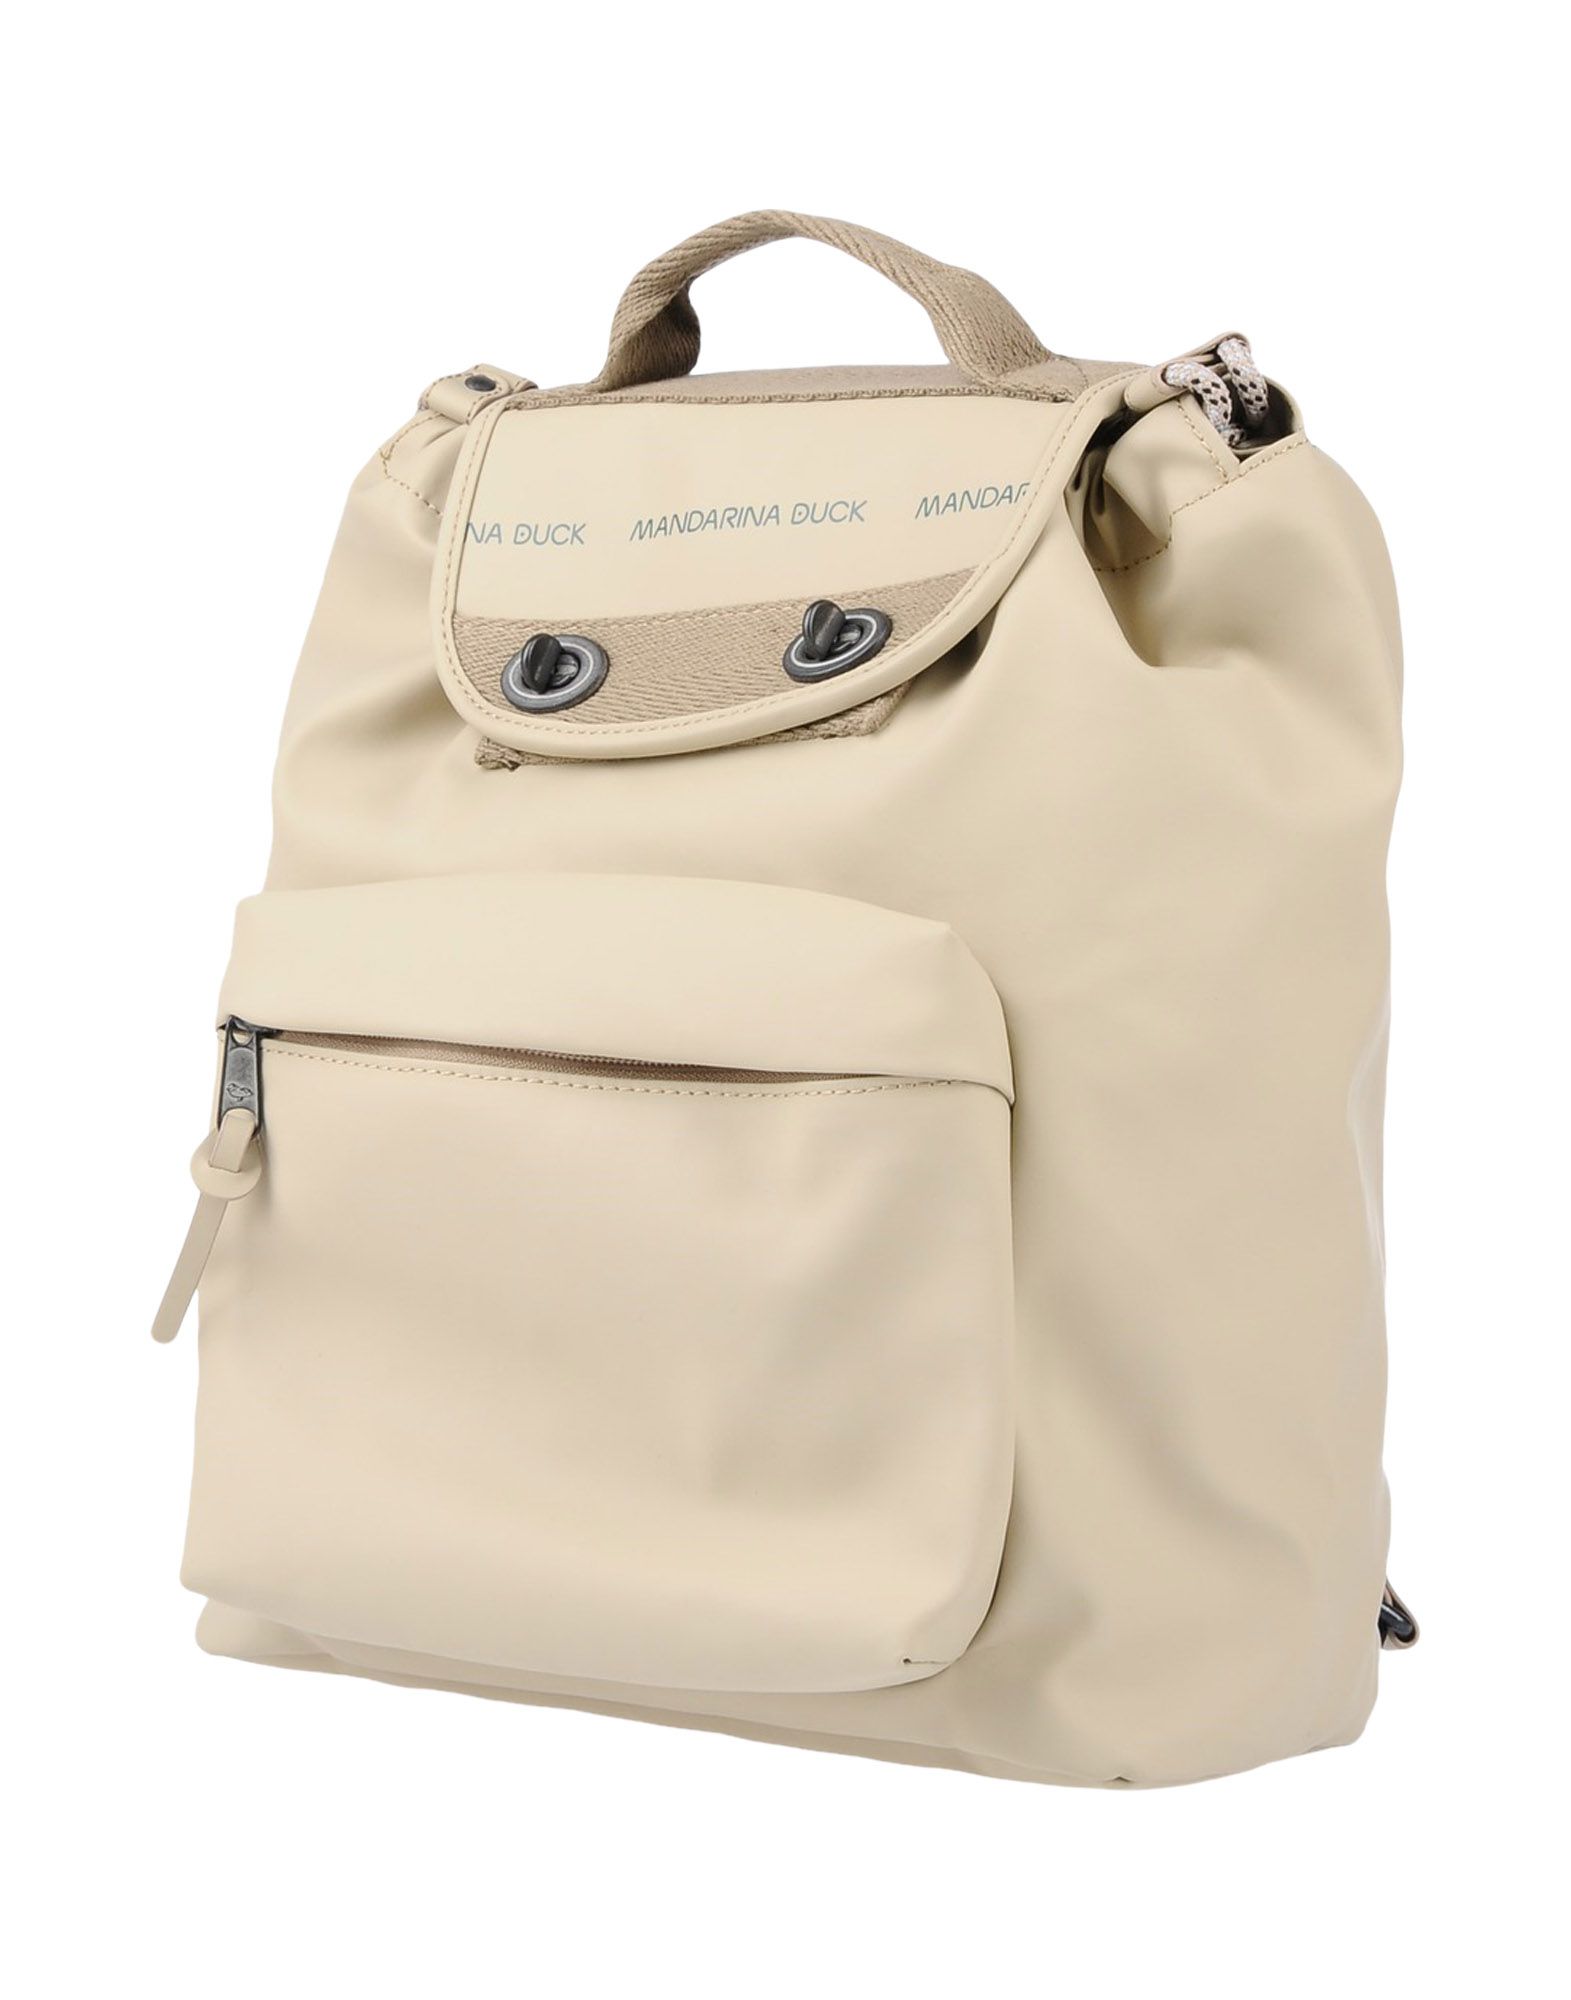 MANDARINA DUCK Backpack & fanny pack,45406514VP 1